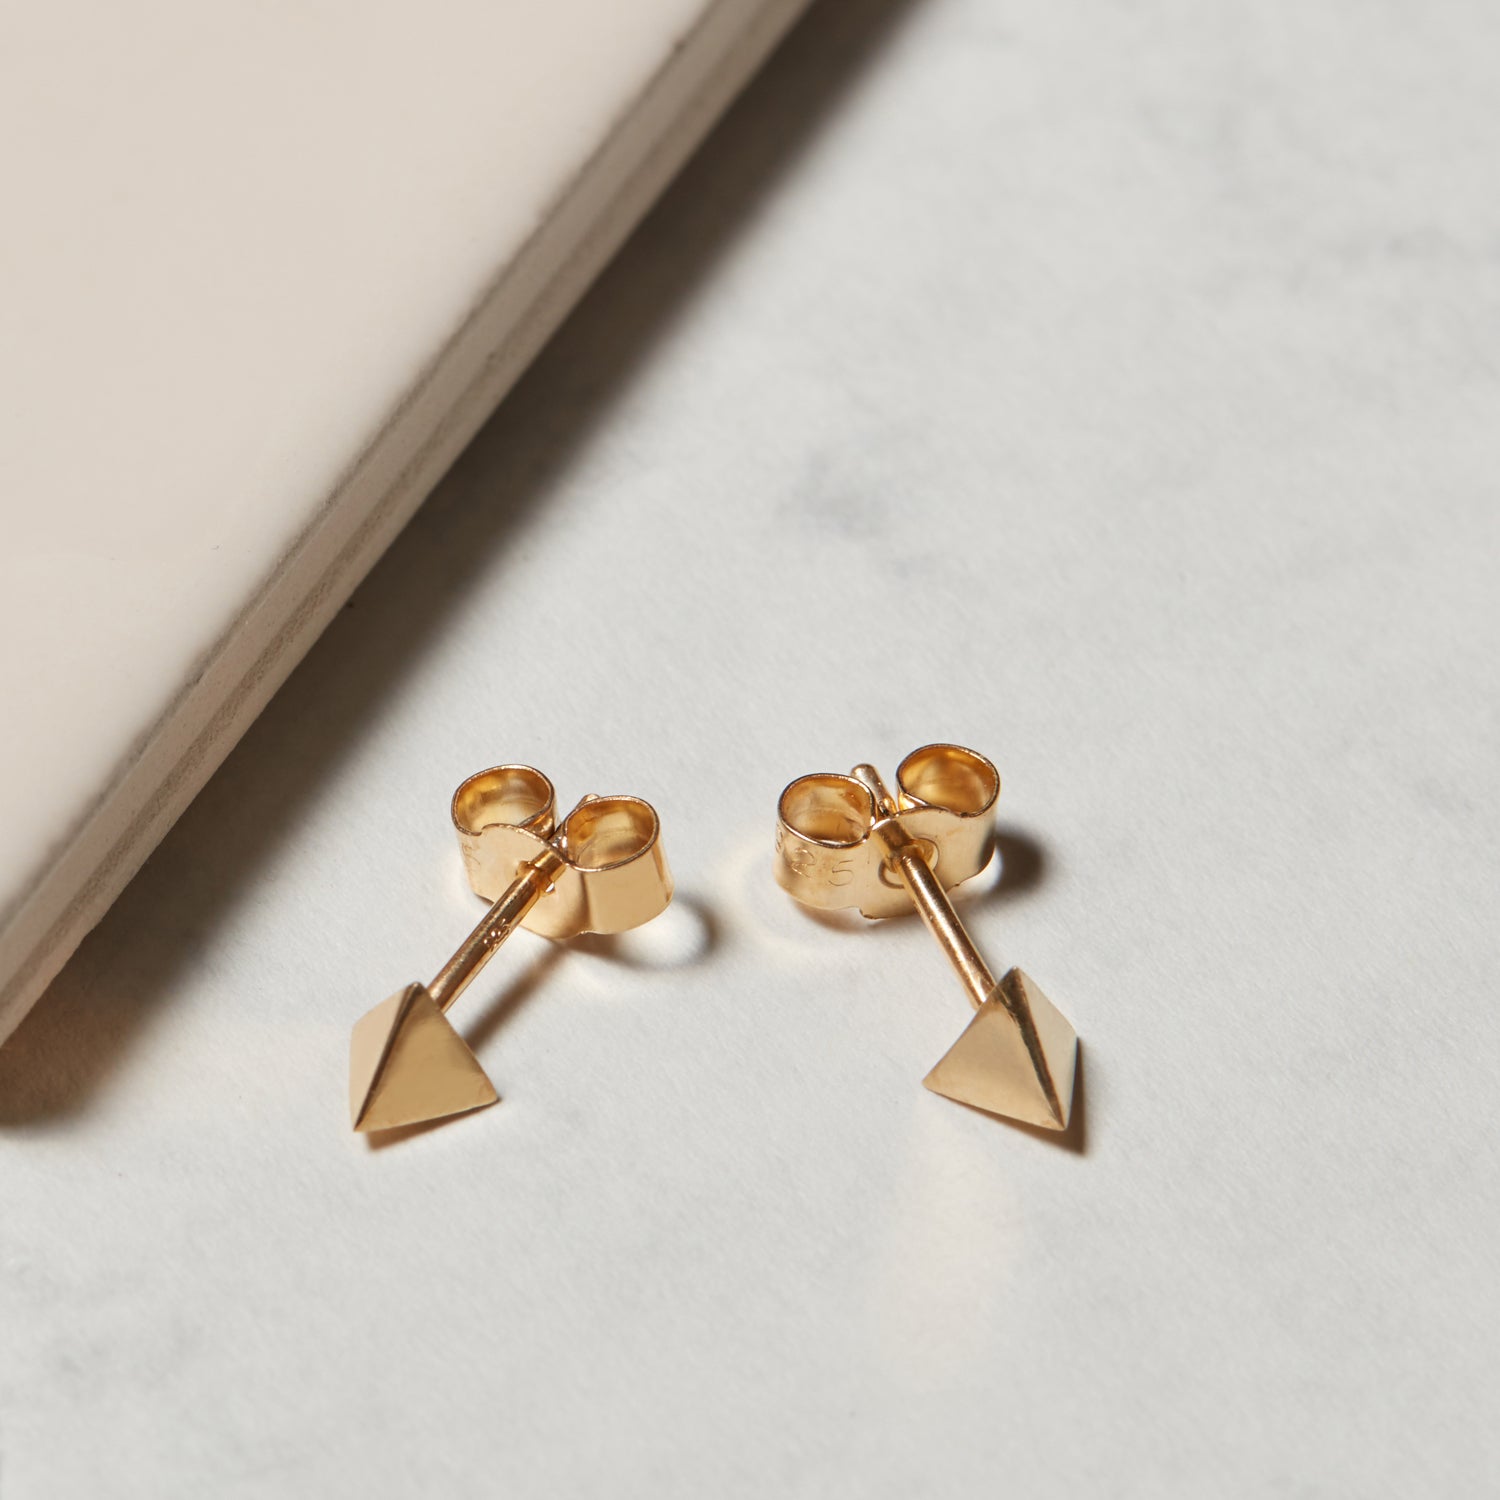 Tetrahedron Stud Earrings - Gold